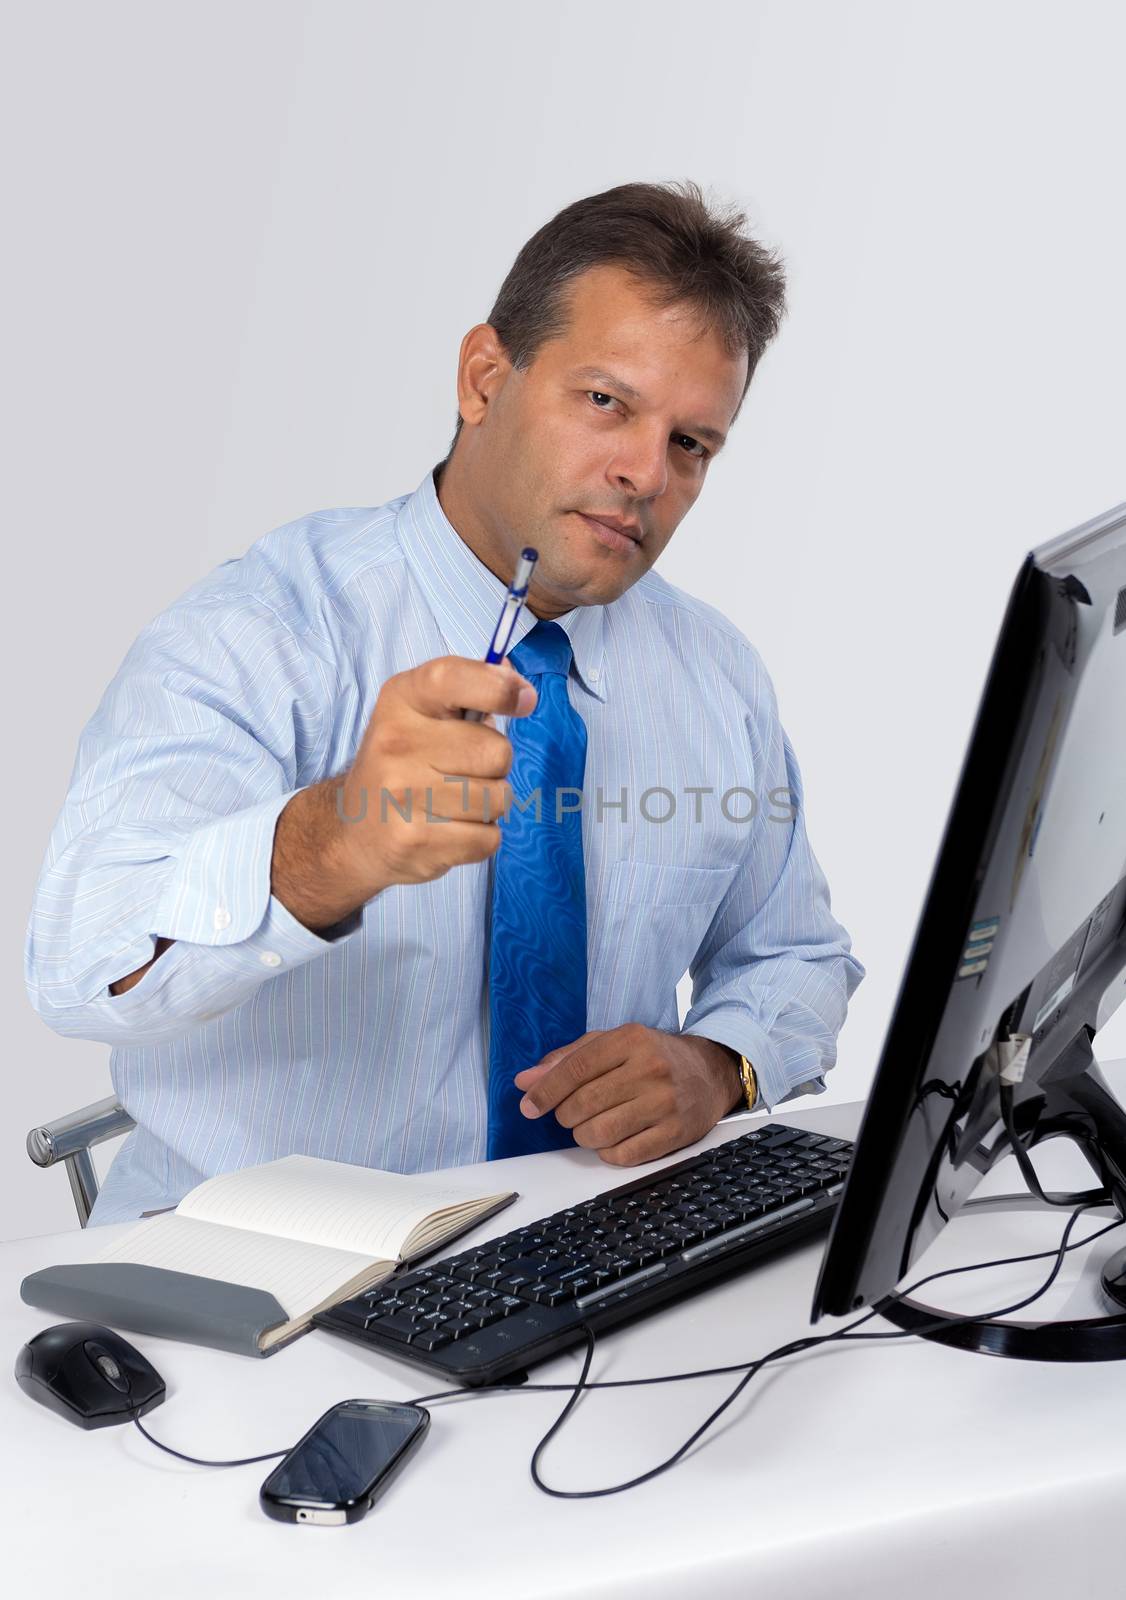 A man wearing blue shirt with a computer